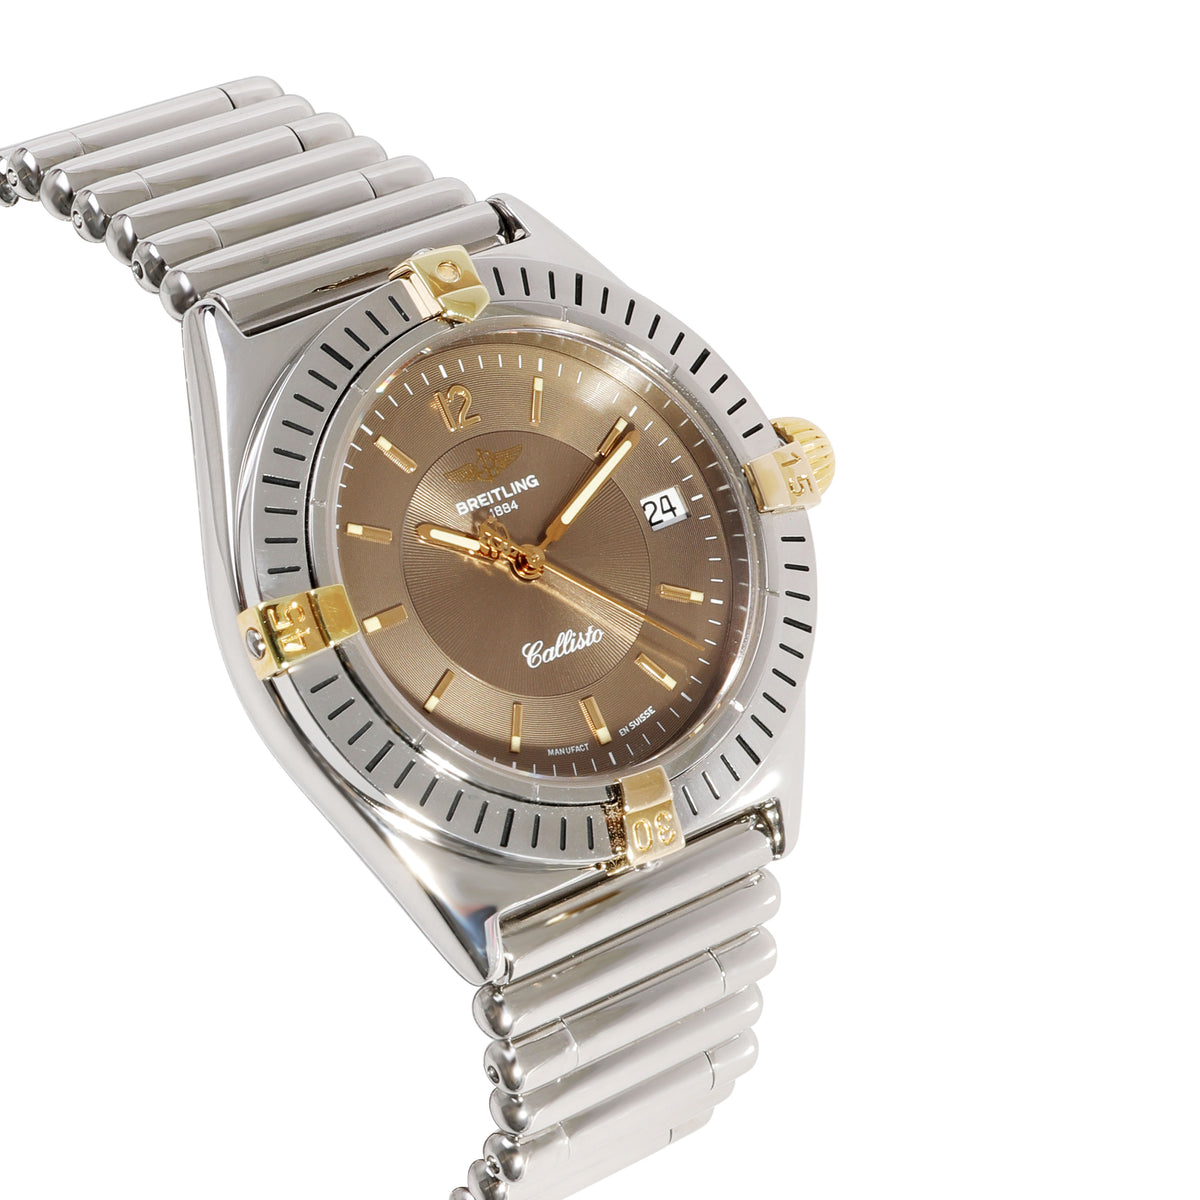 Breitling Callisto B57045 Unisex Watch in 18kt Stainless Steel/Yellow Gold